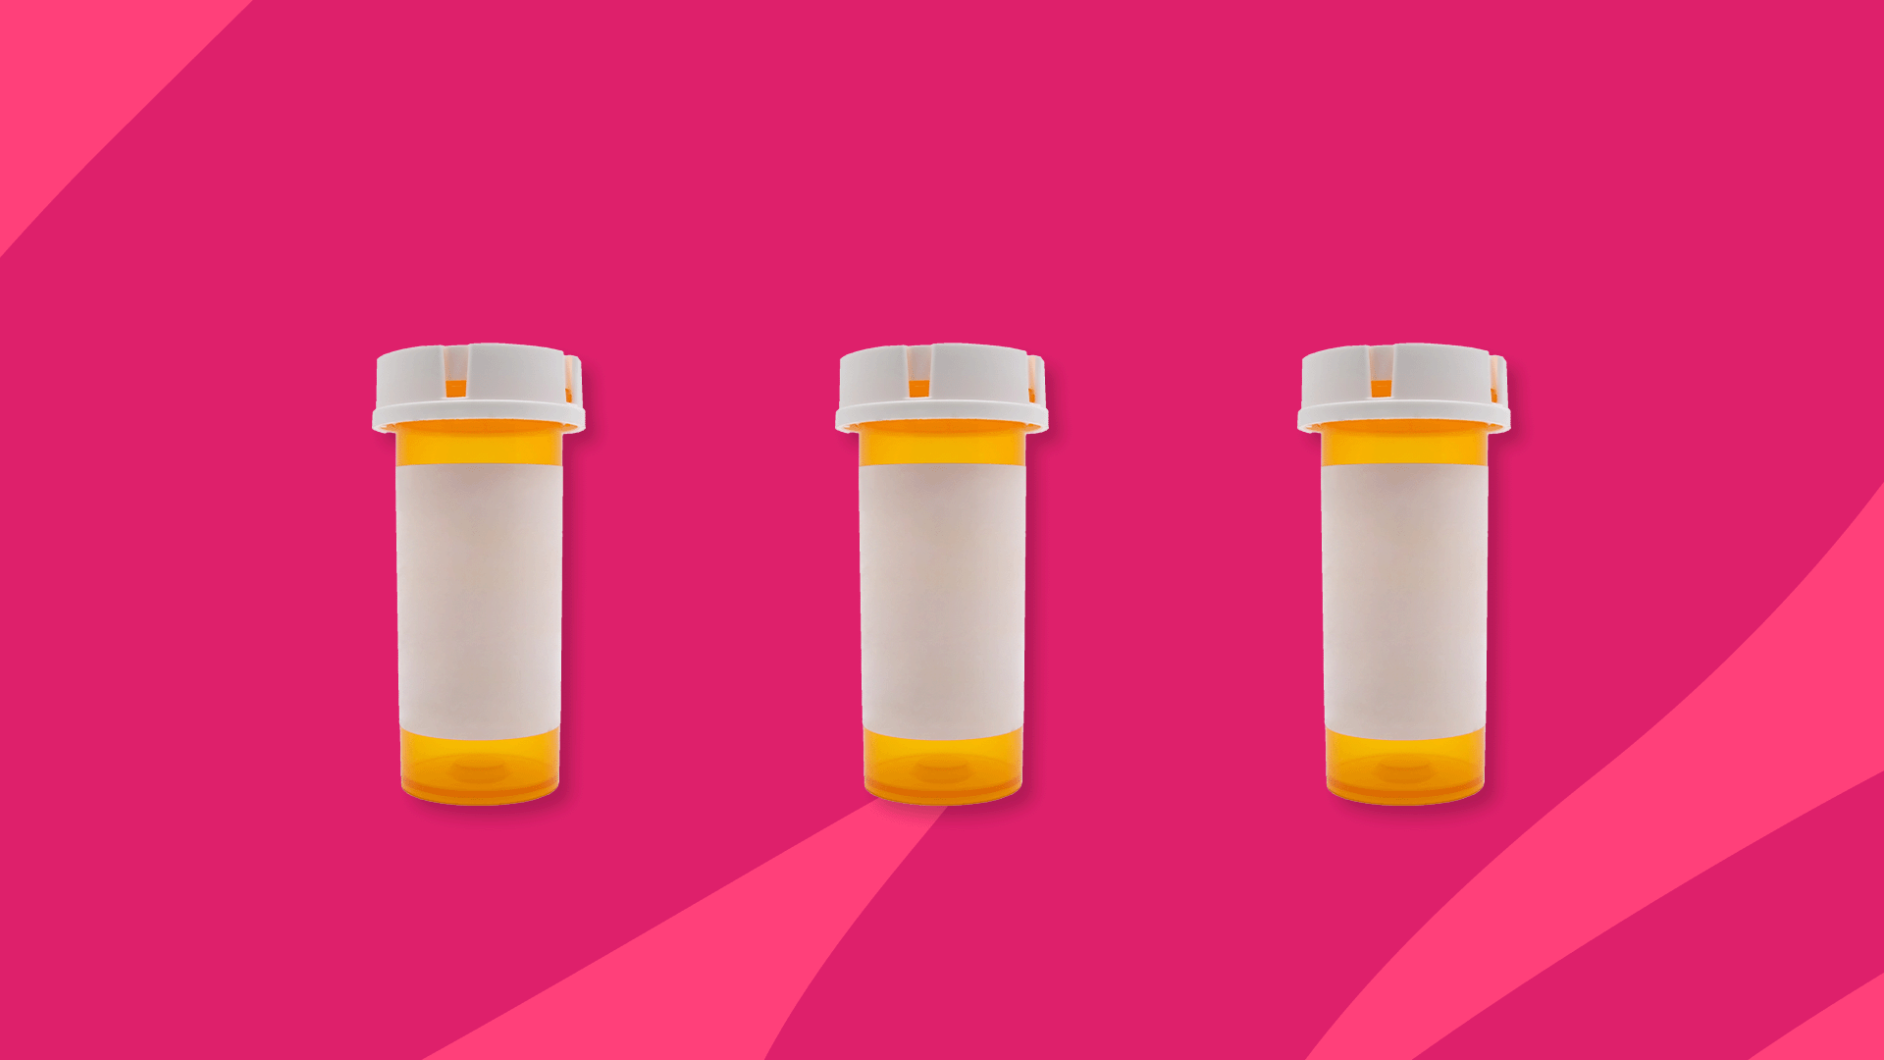 Rx pill bottles: Oxycodone alternatives